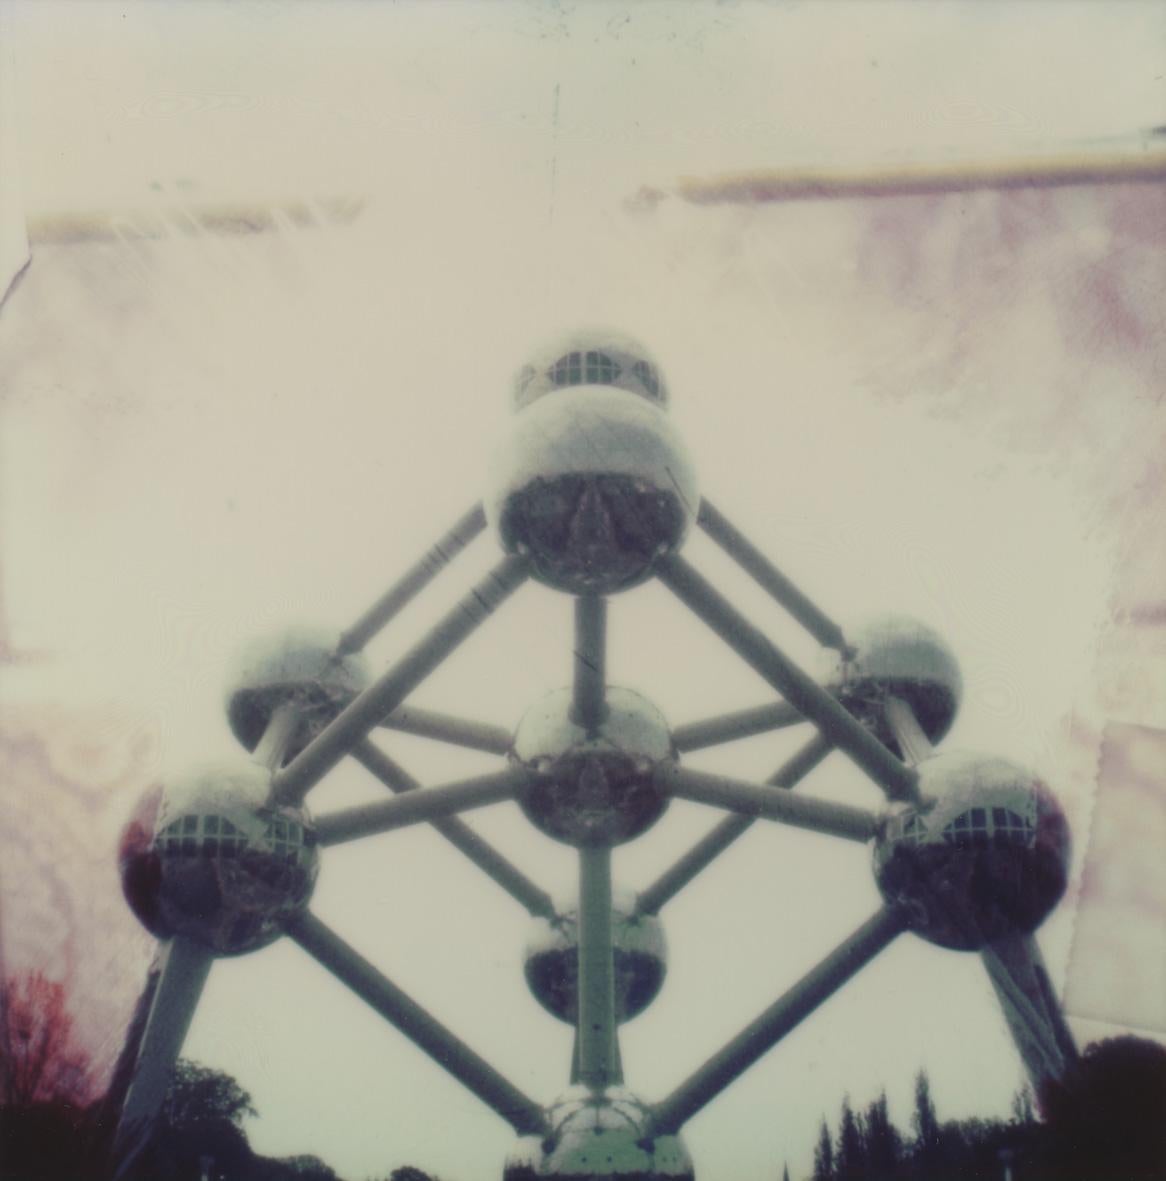 Atomium #02 [With greetings from] - Polaroid, Landscape, Belgium, Color